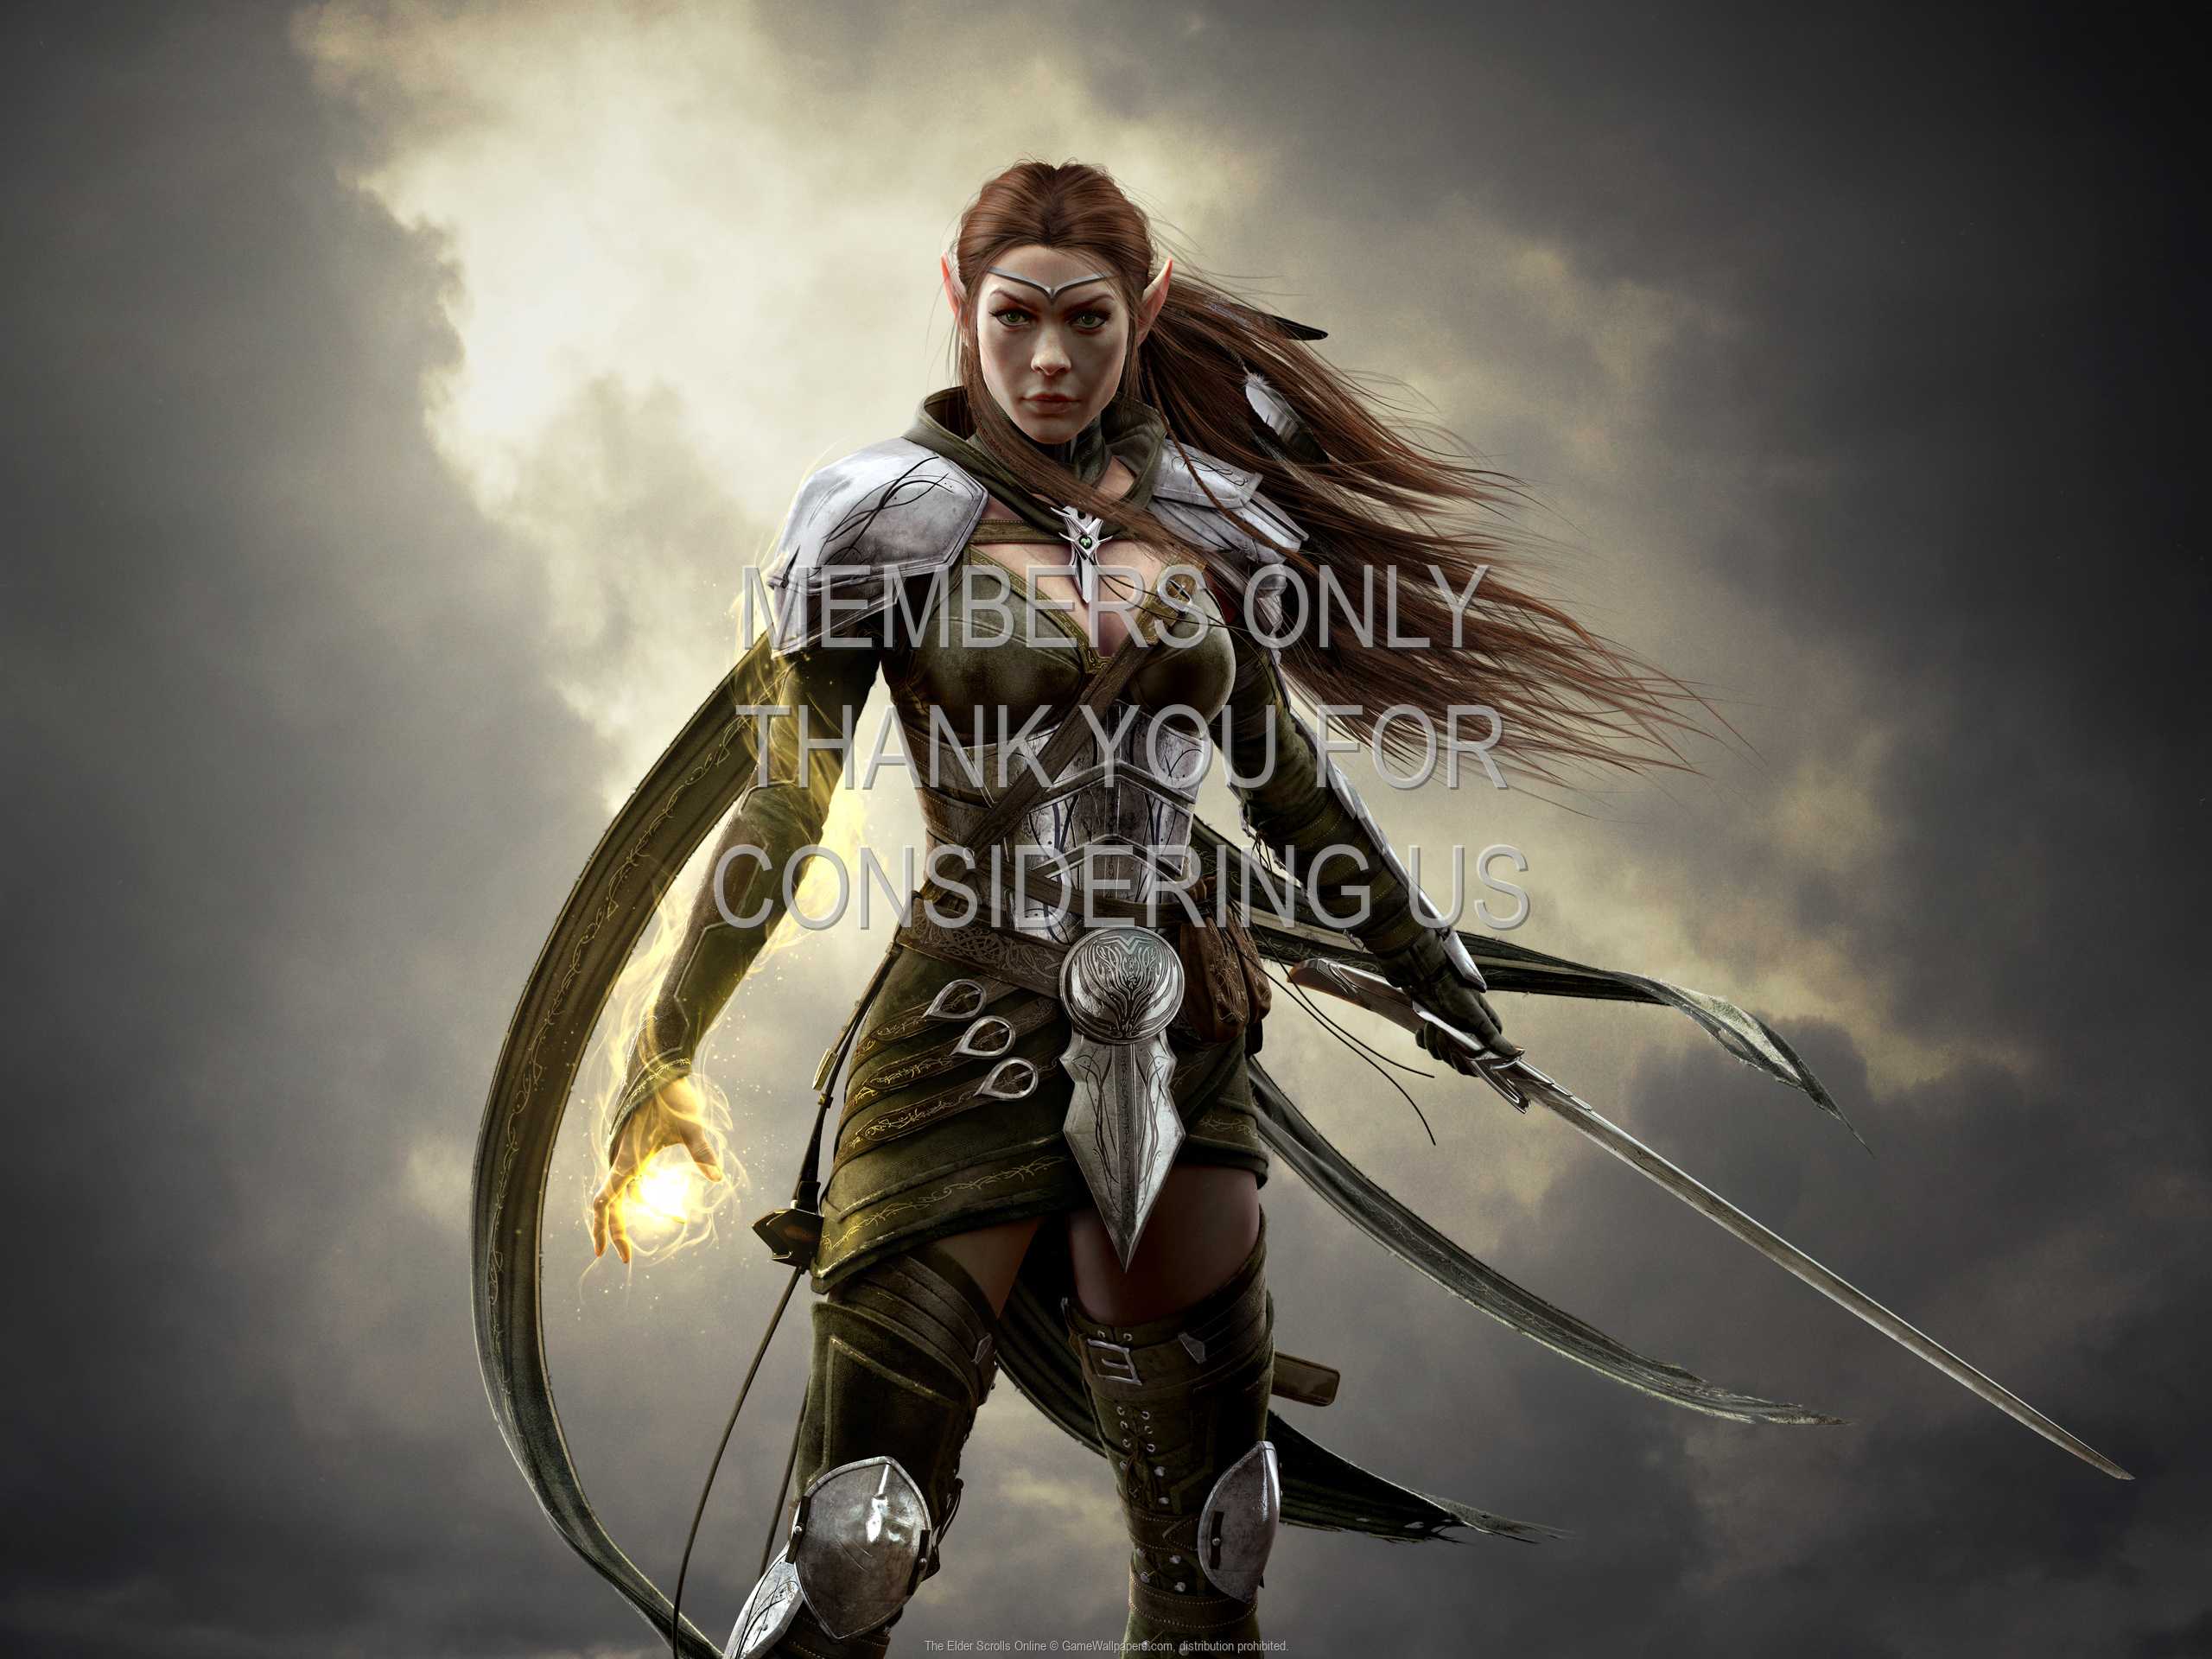 The Elder Scrolls Online 1080p%20Horizontal Mobile wallpaper or background 10